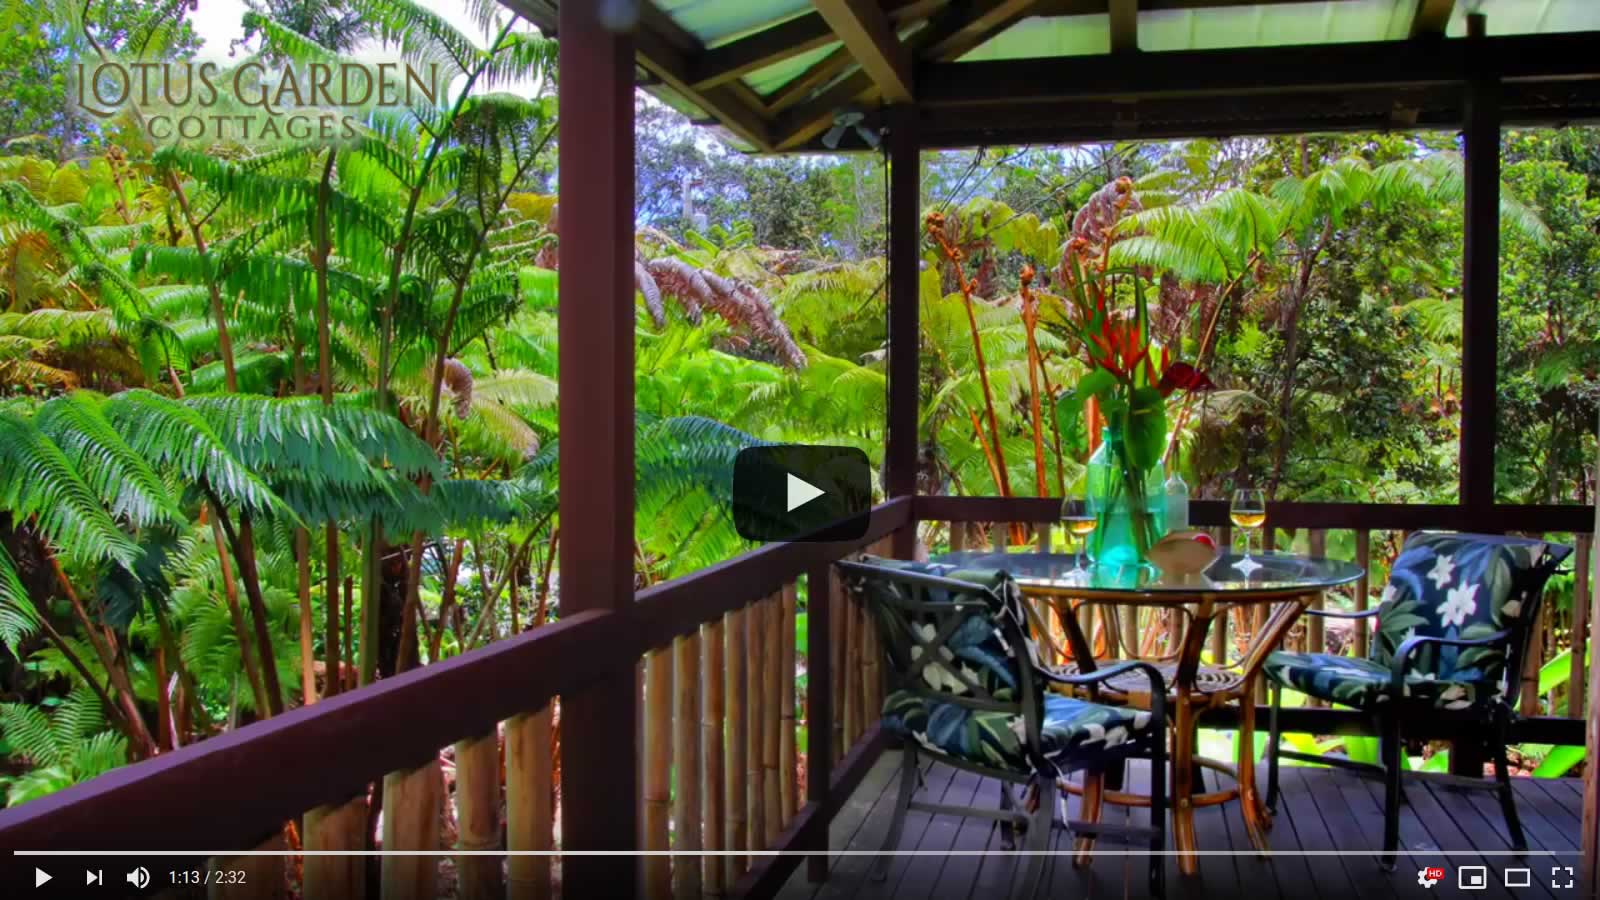 Lotus Garden Cottages Video